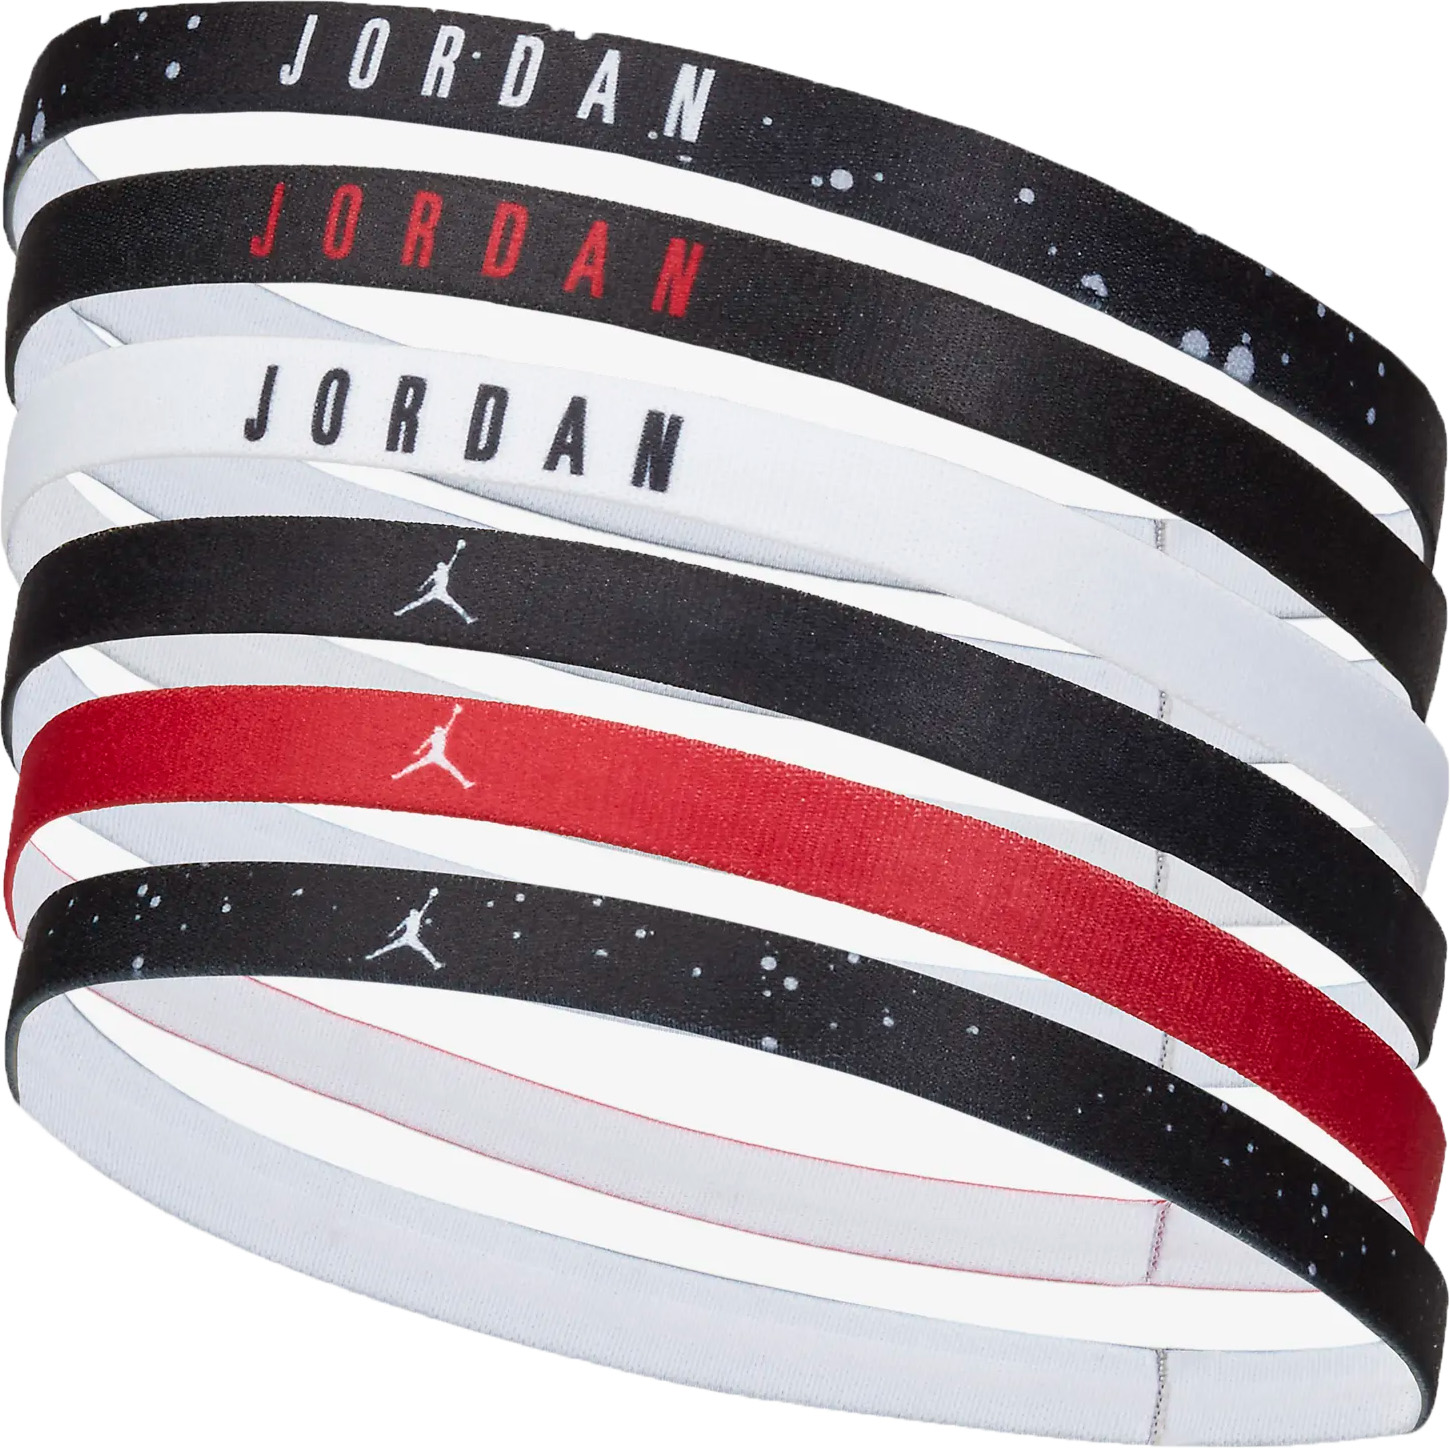 Gumičky do vlasů Nike Jordan Elastic (6 kusů)